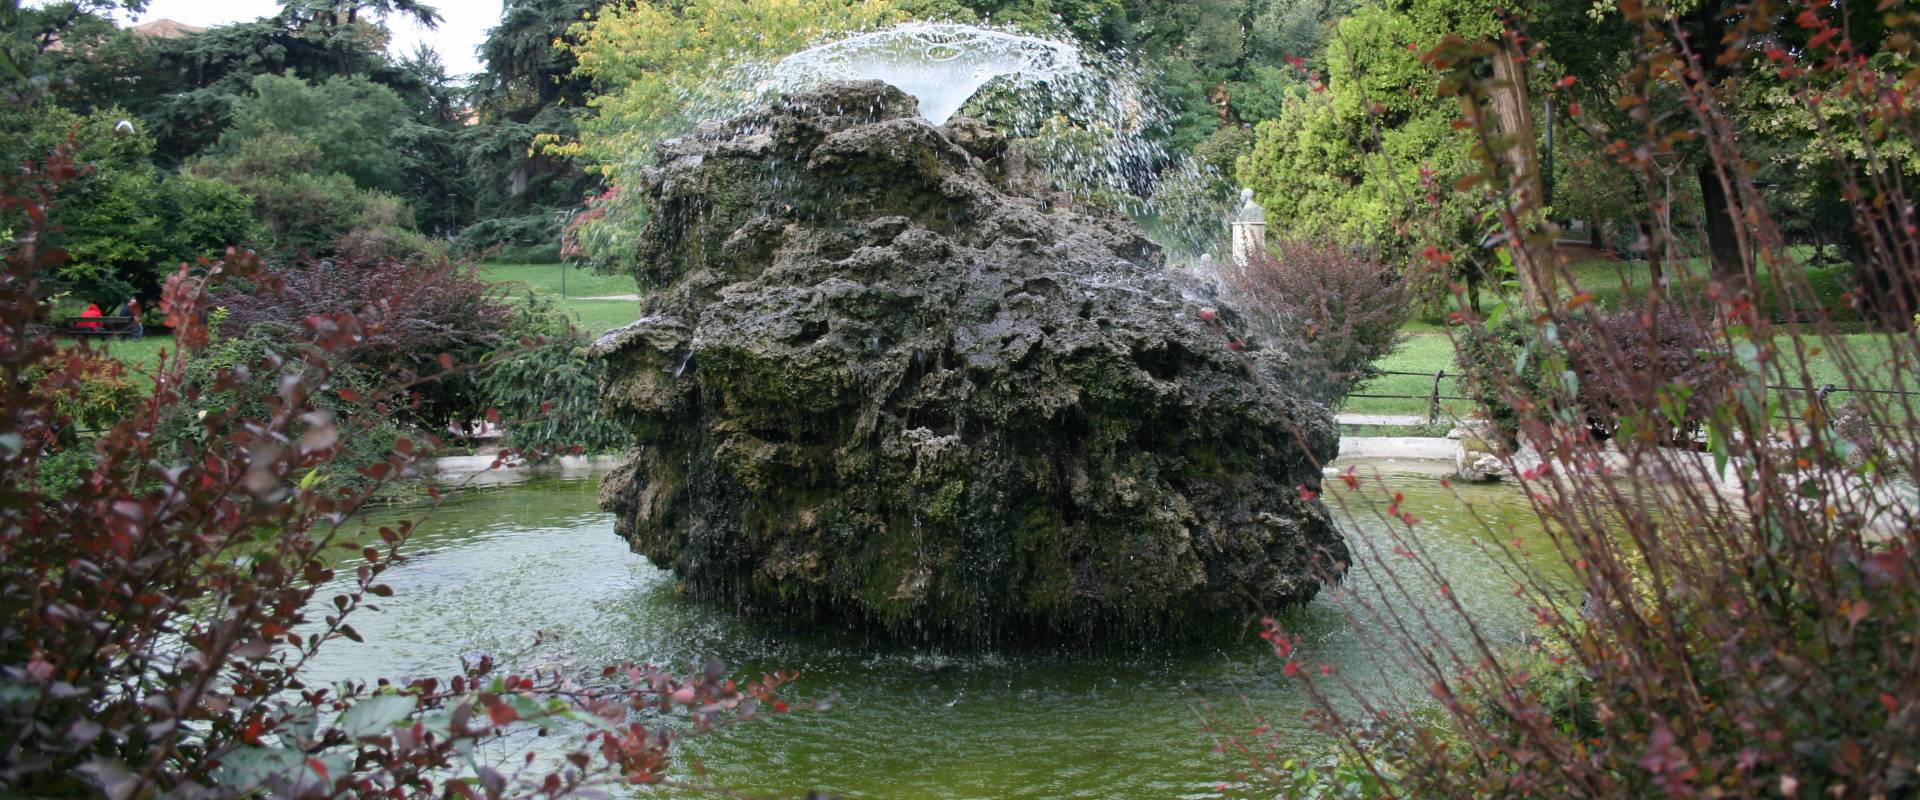 La fontana dei giardini margherita foto di Rossellaman